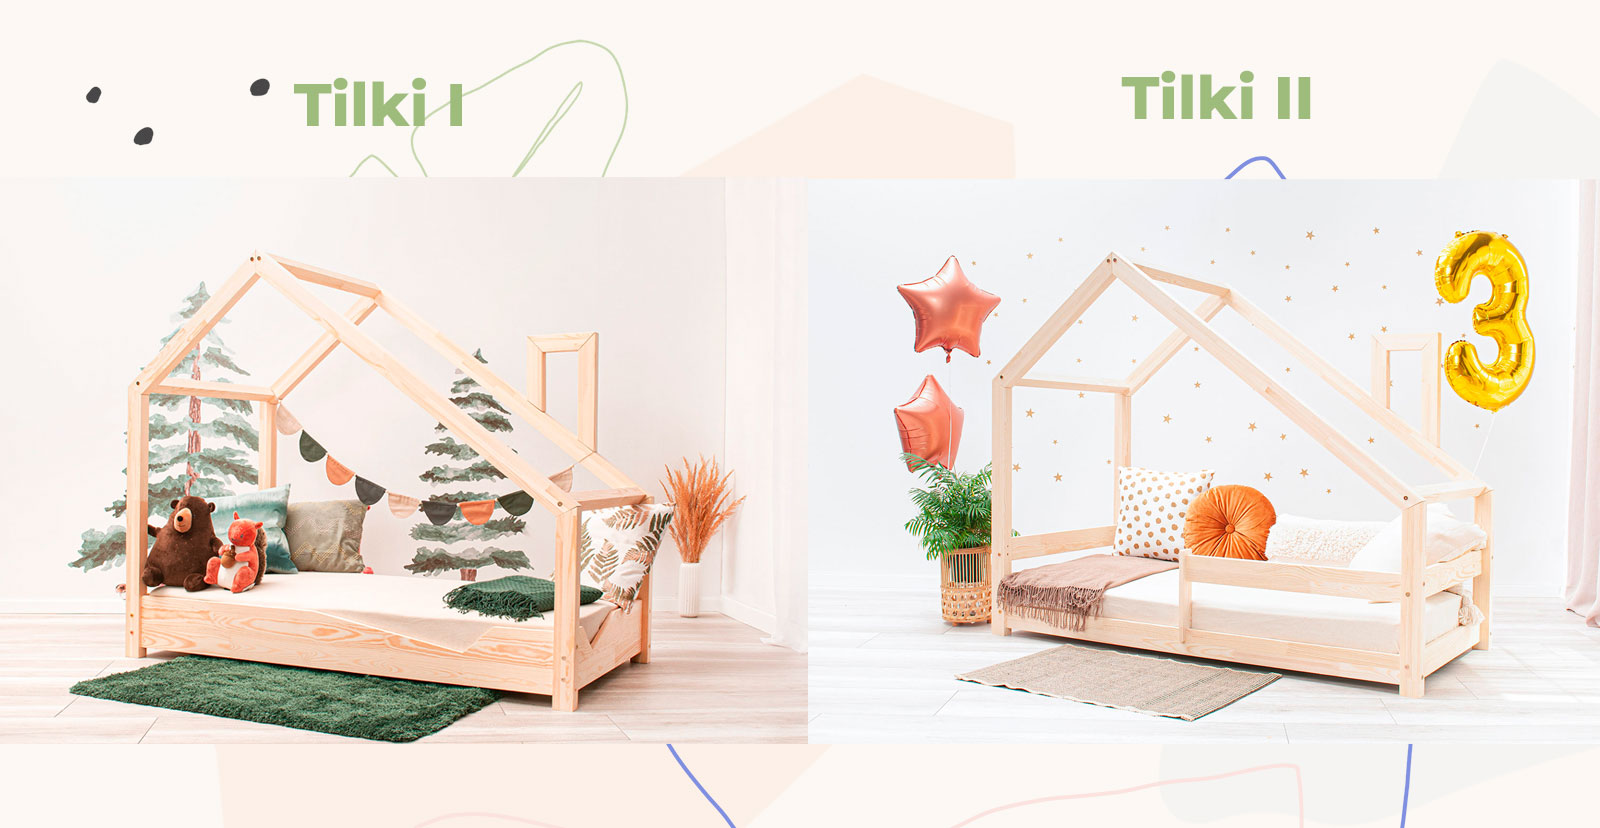 Comparaison des lits Tilki I et Tilki II